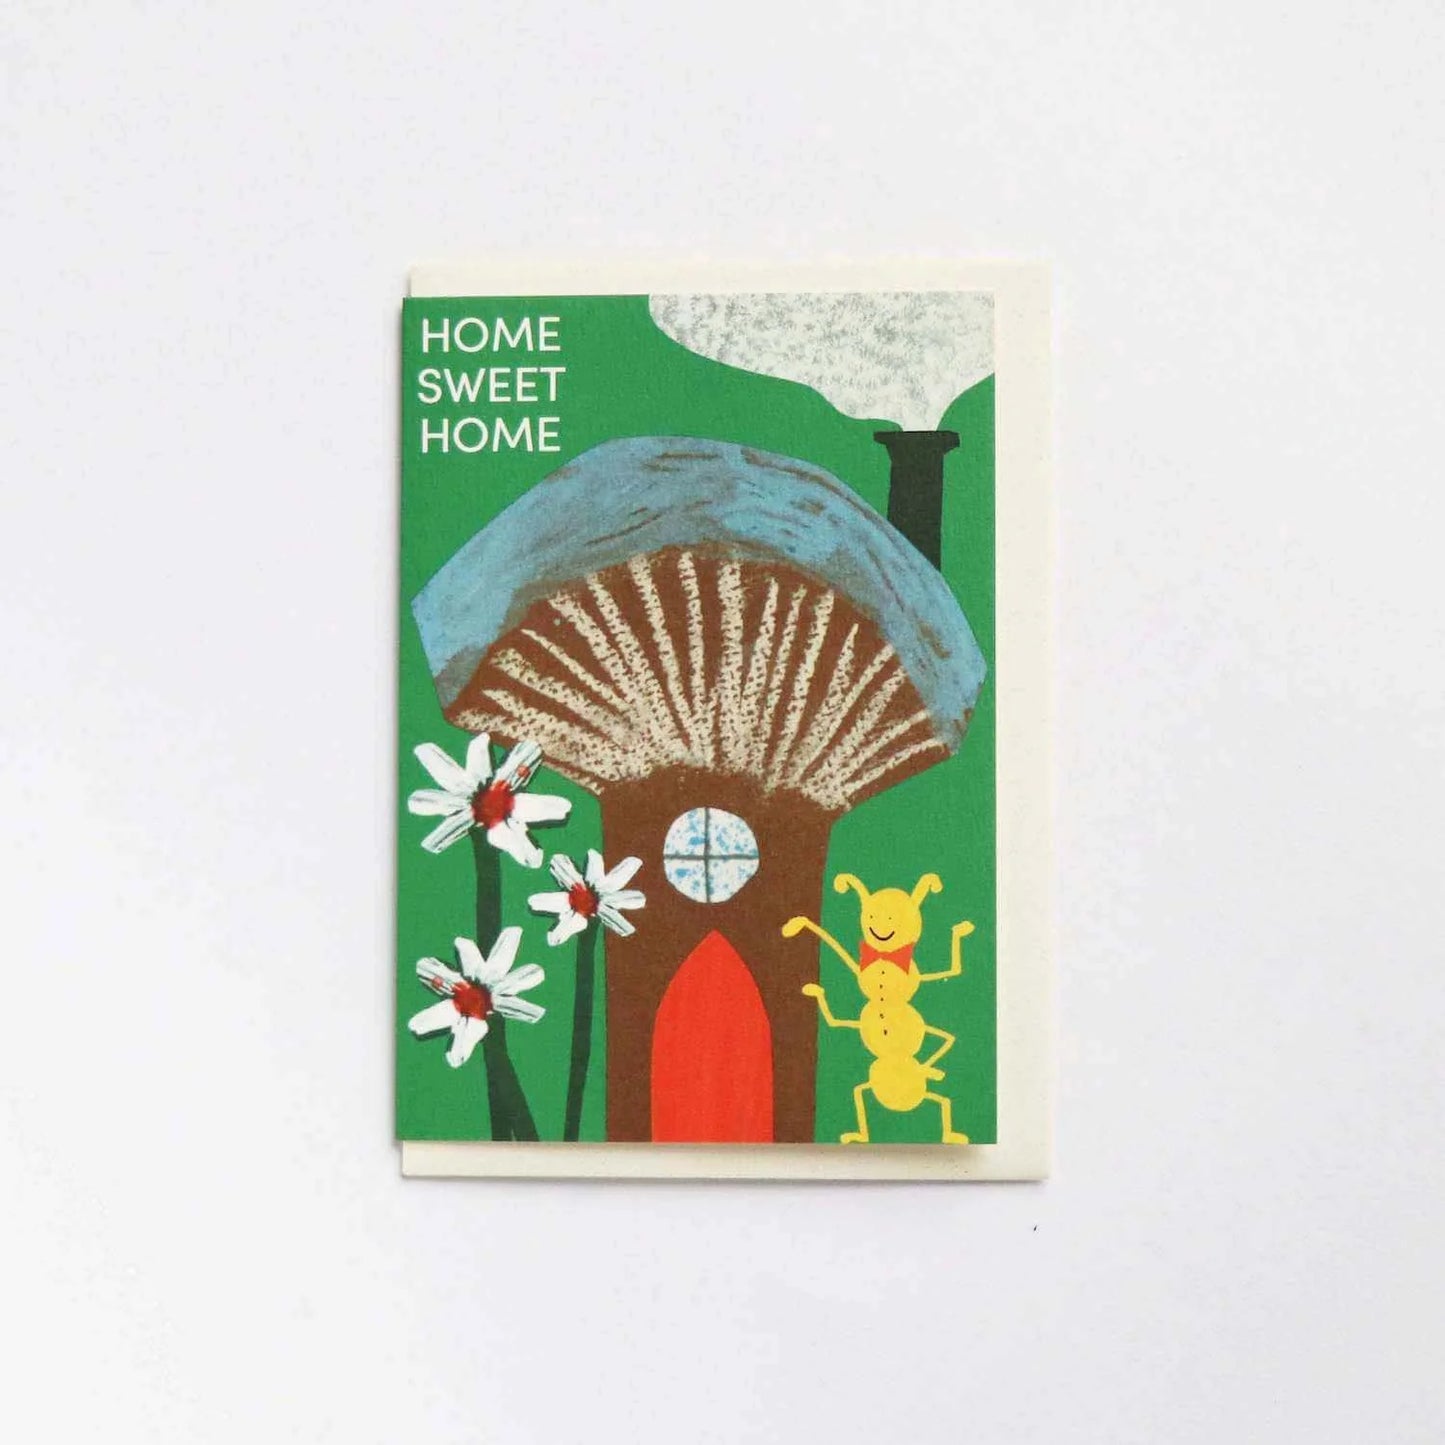 Home sweet home mushroom house card